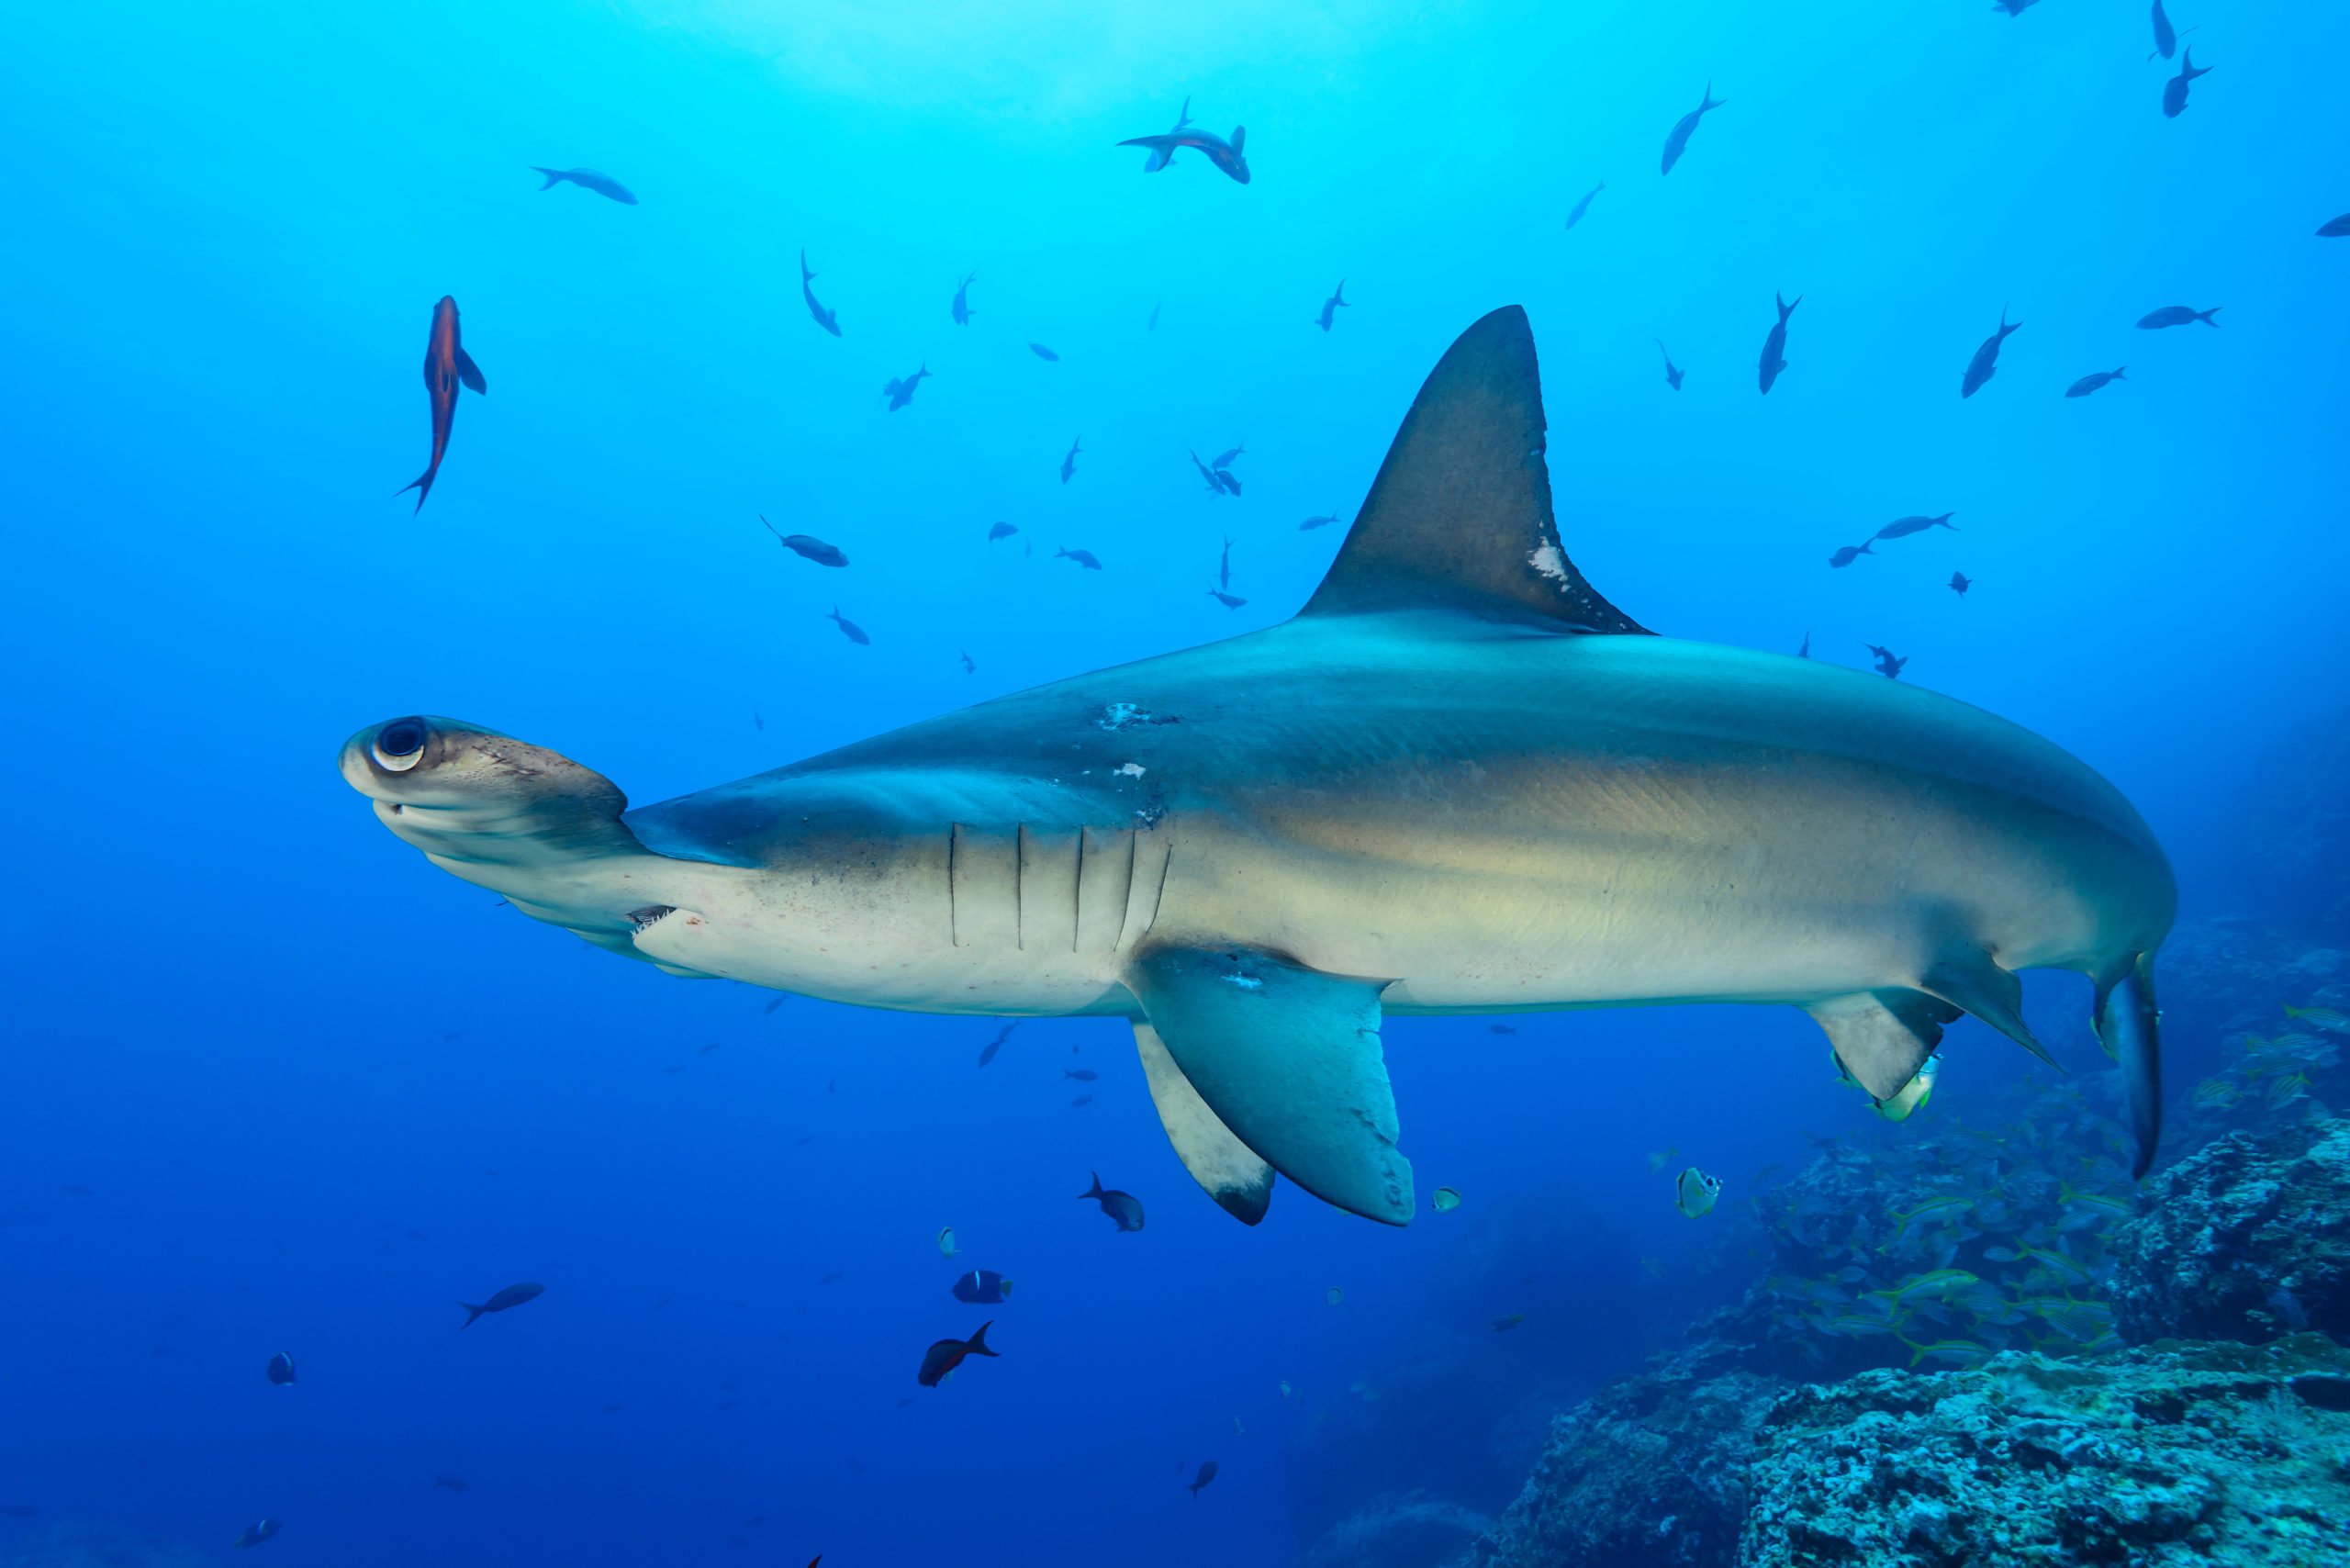 A scalloped hammerhead shark swimming